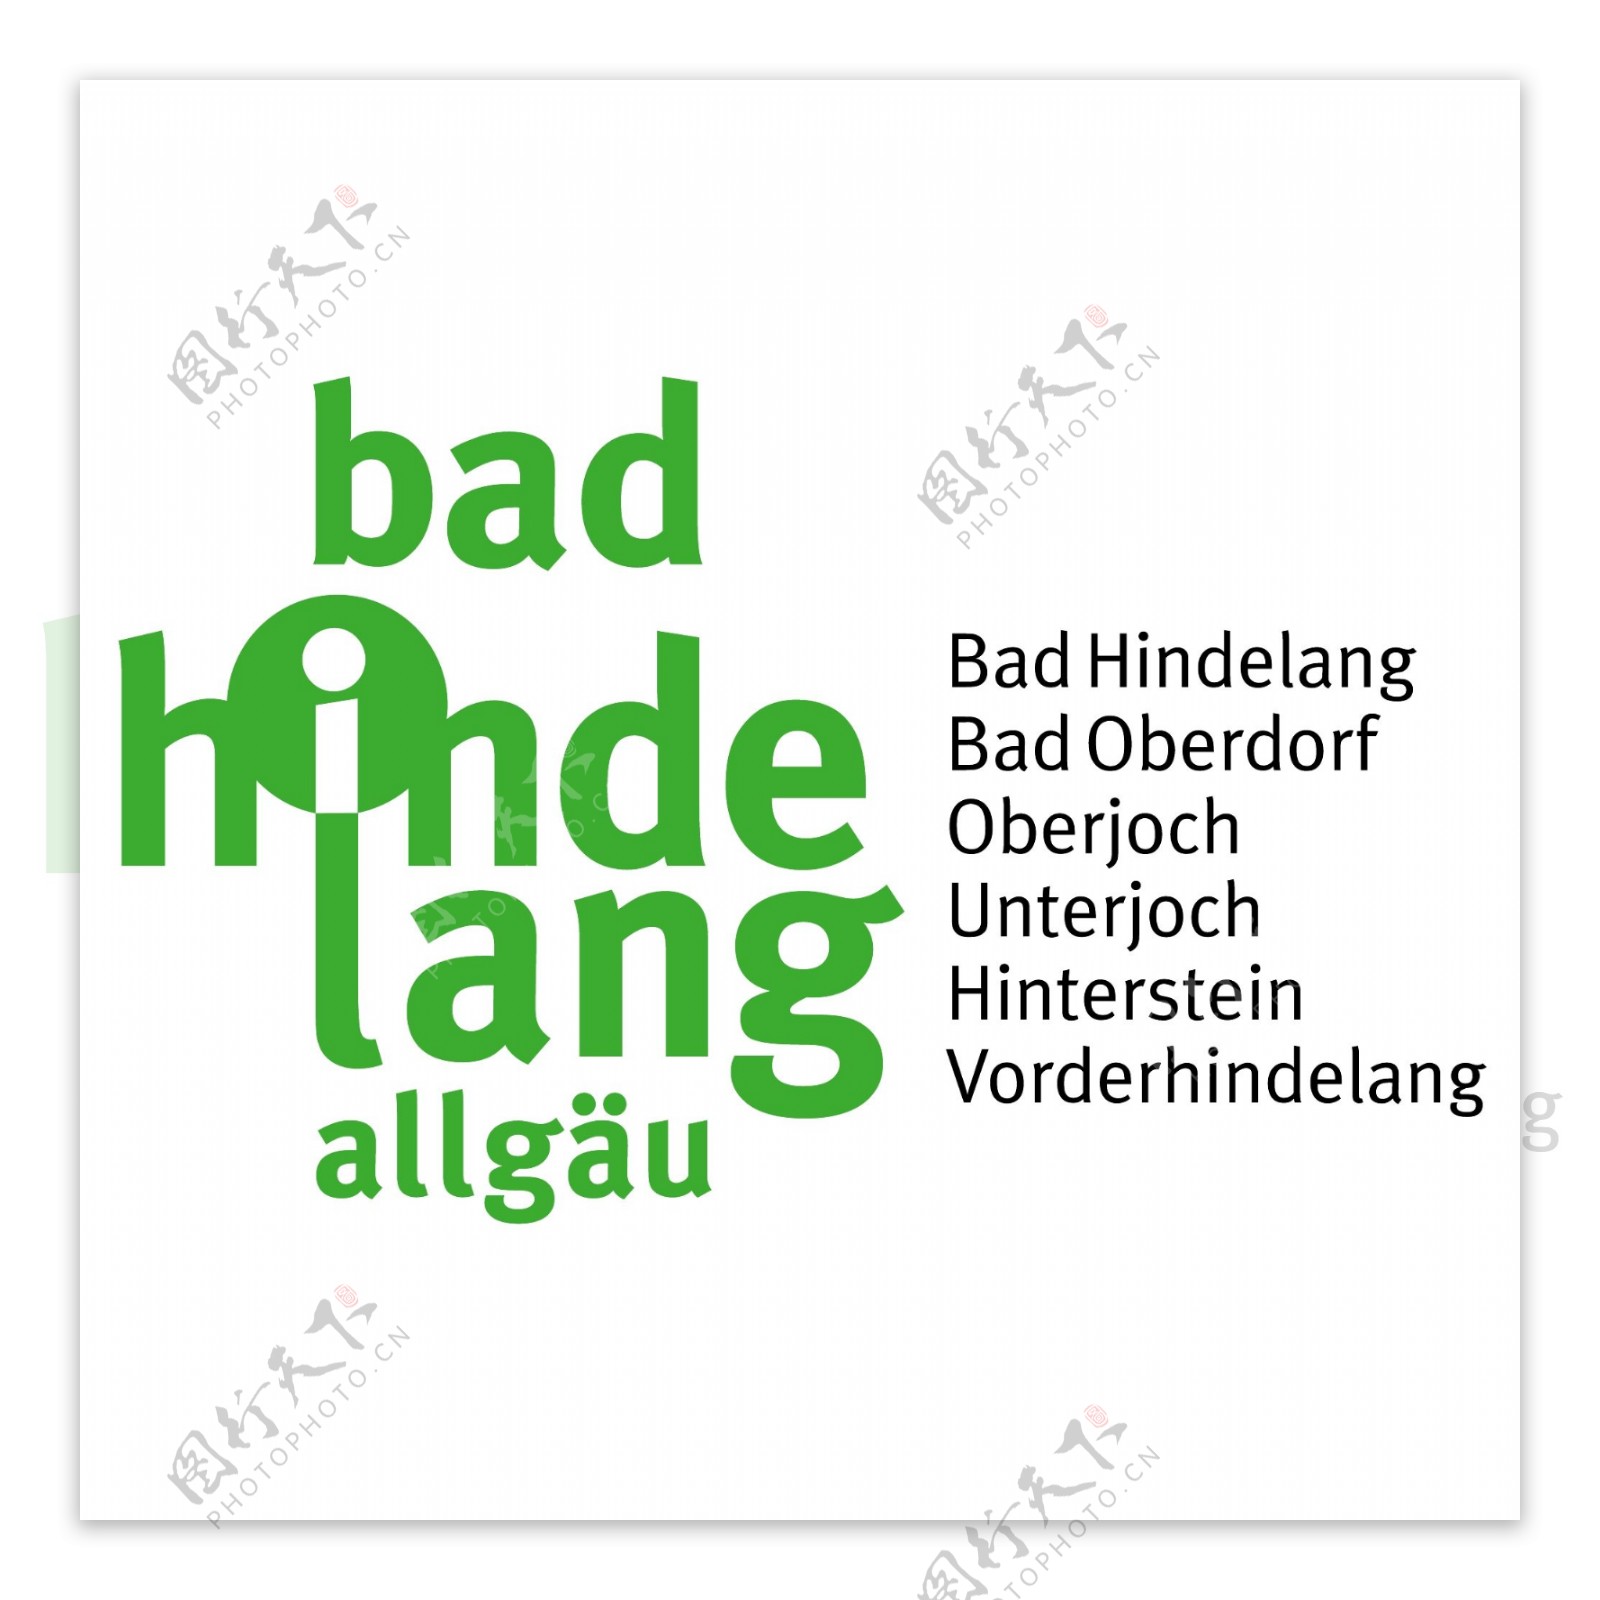 BadHindelangAllgand228ulogo设计欣赏BadHindelangAllgand228u旅行社标志下载标志设计欣赏